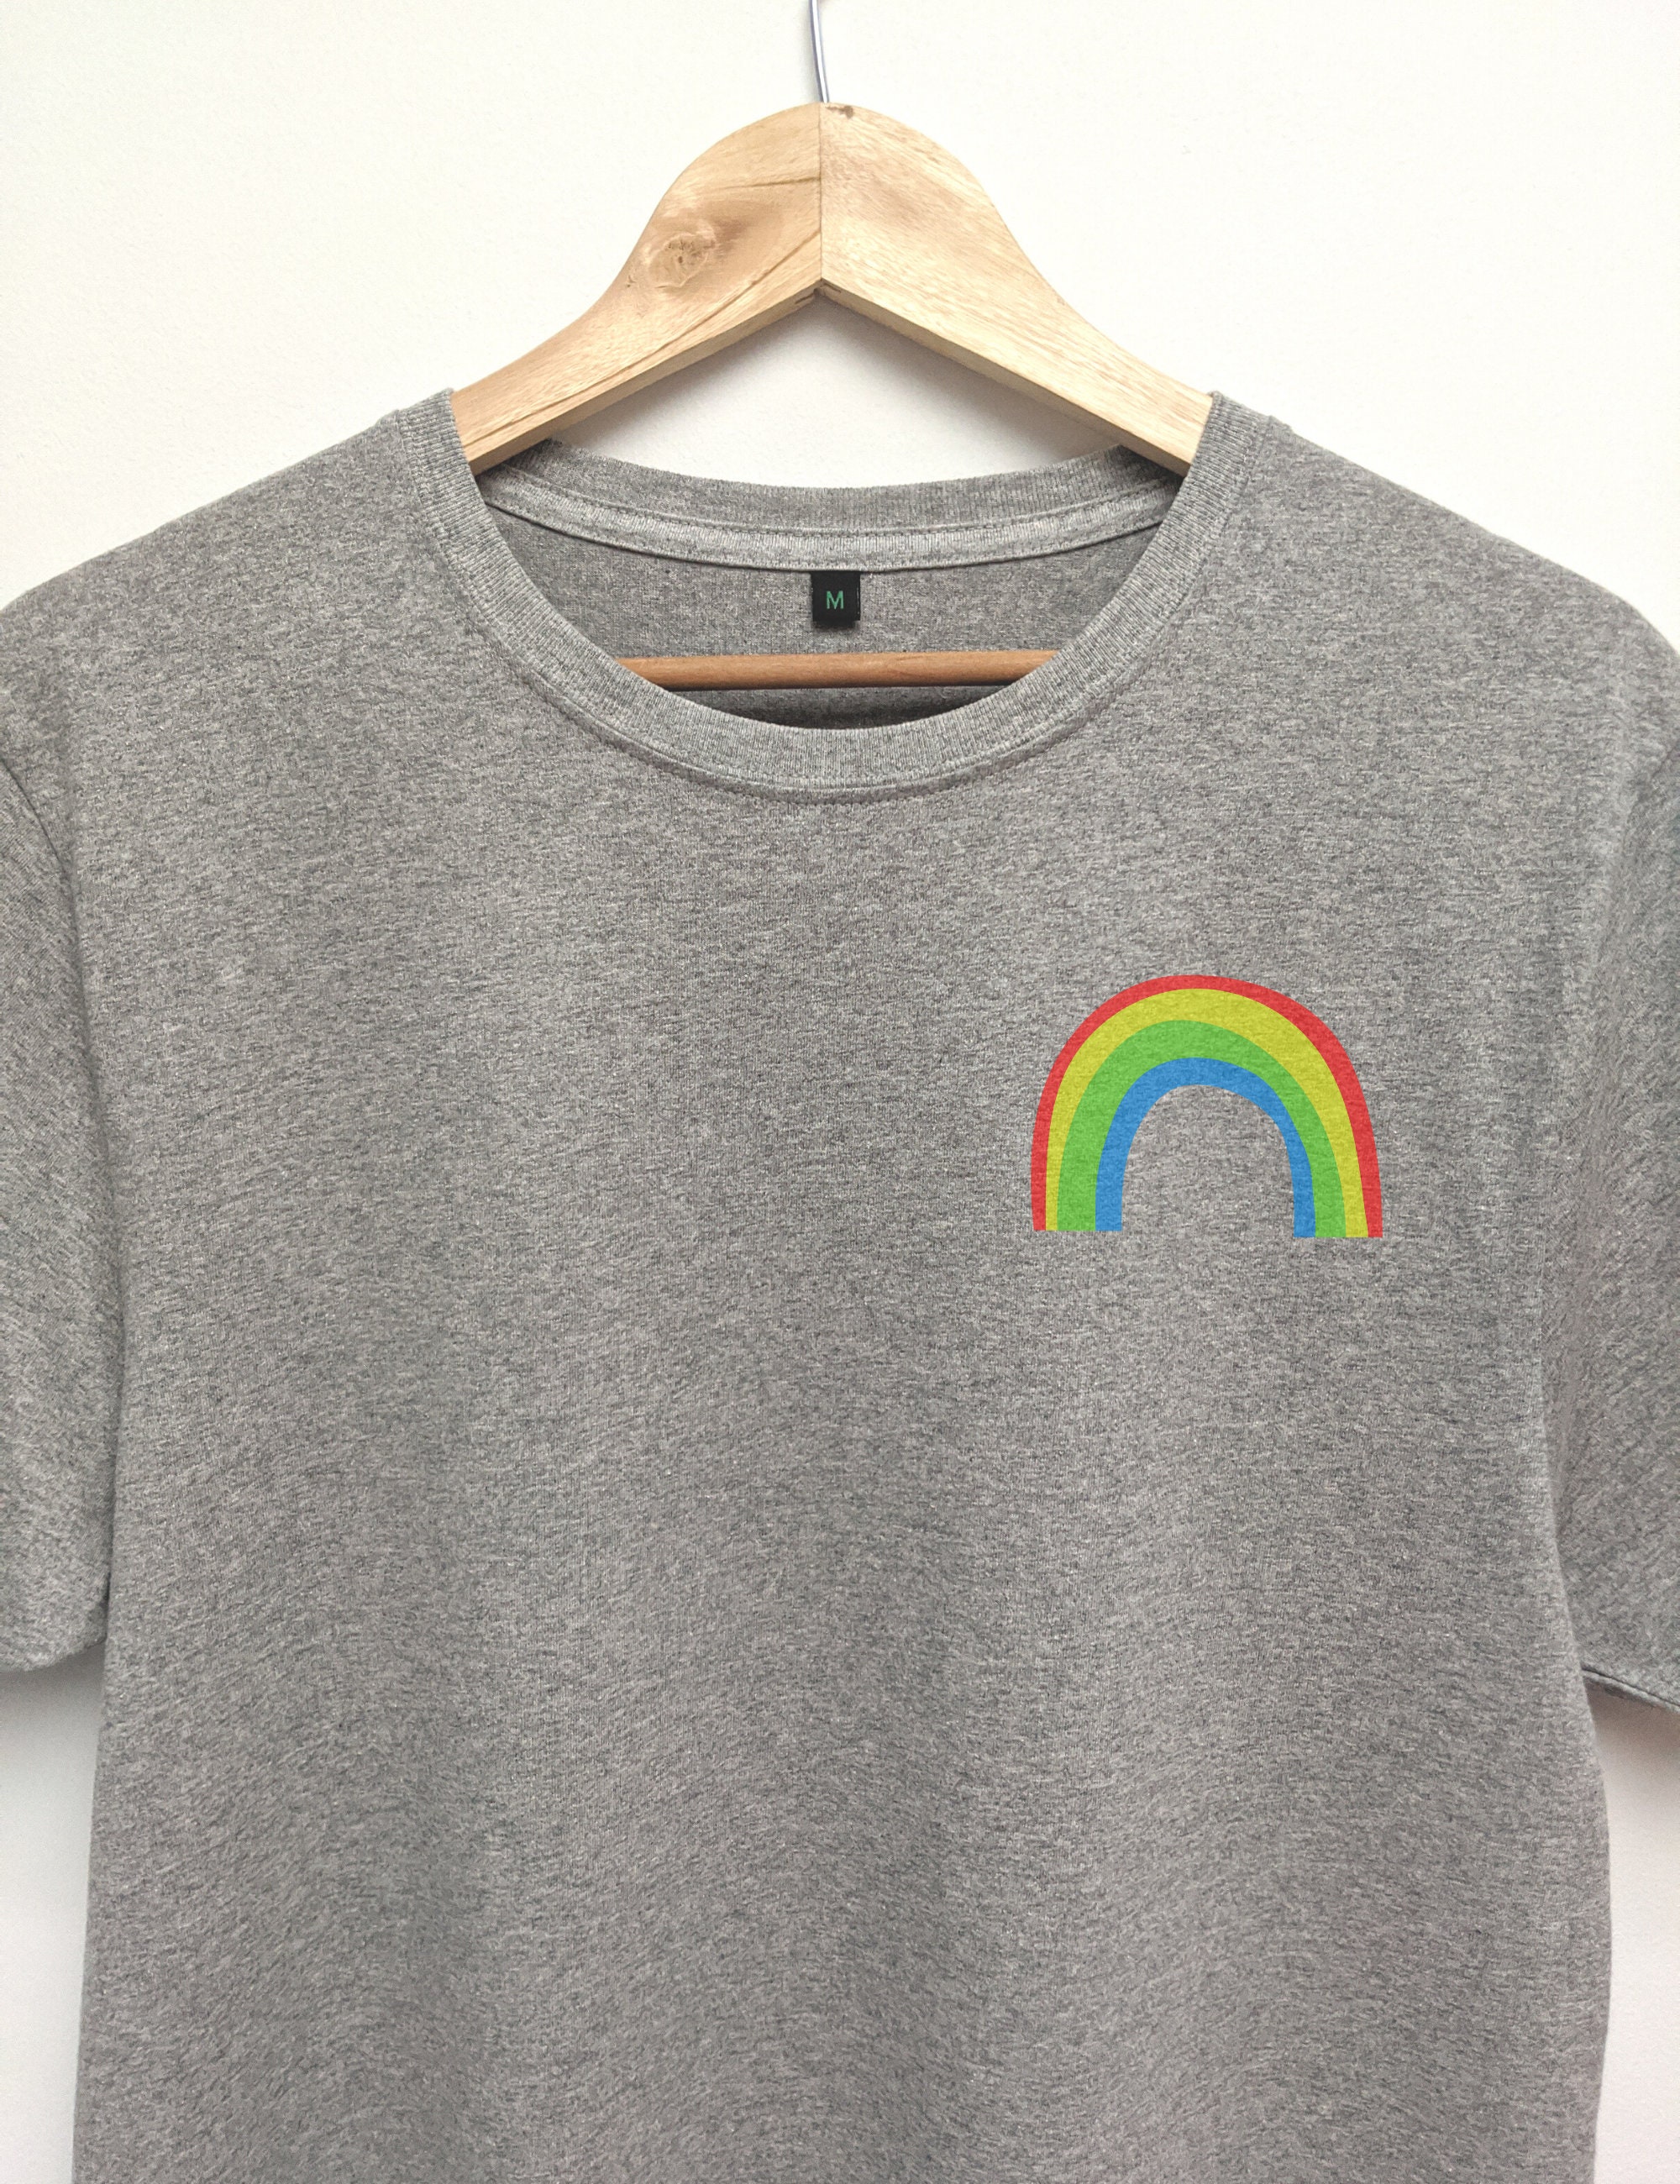 Vintage rainbow Organic t shirt in a unisex fit Loungewear | Etsy